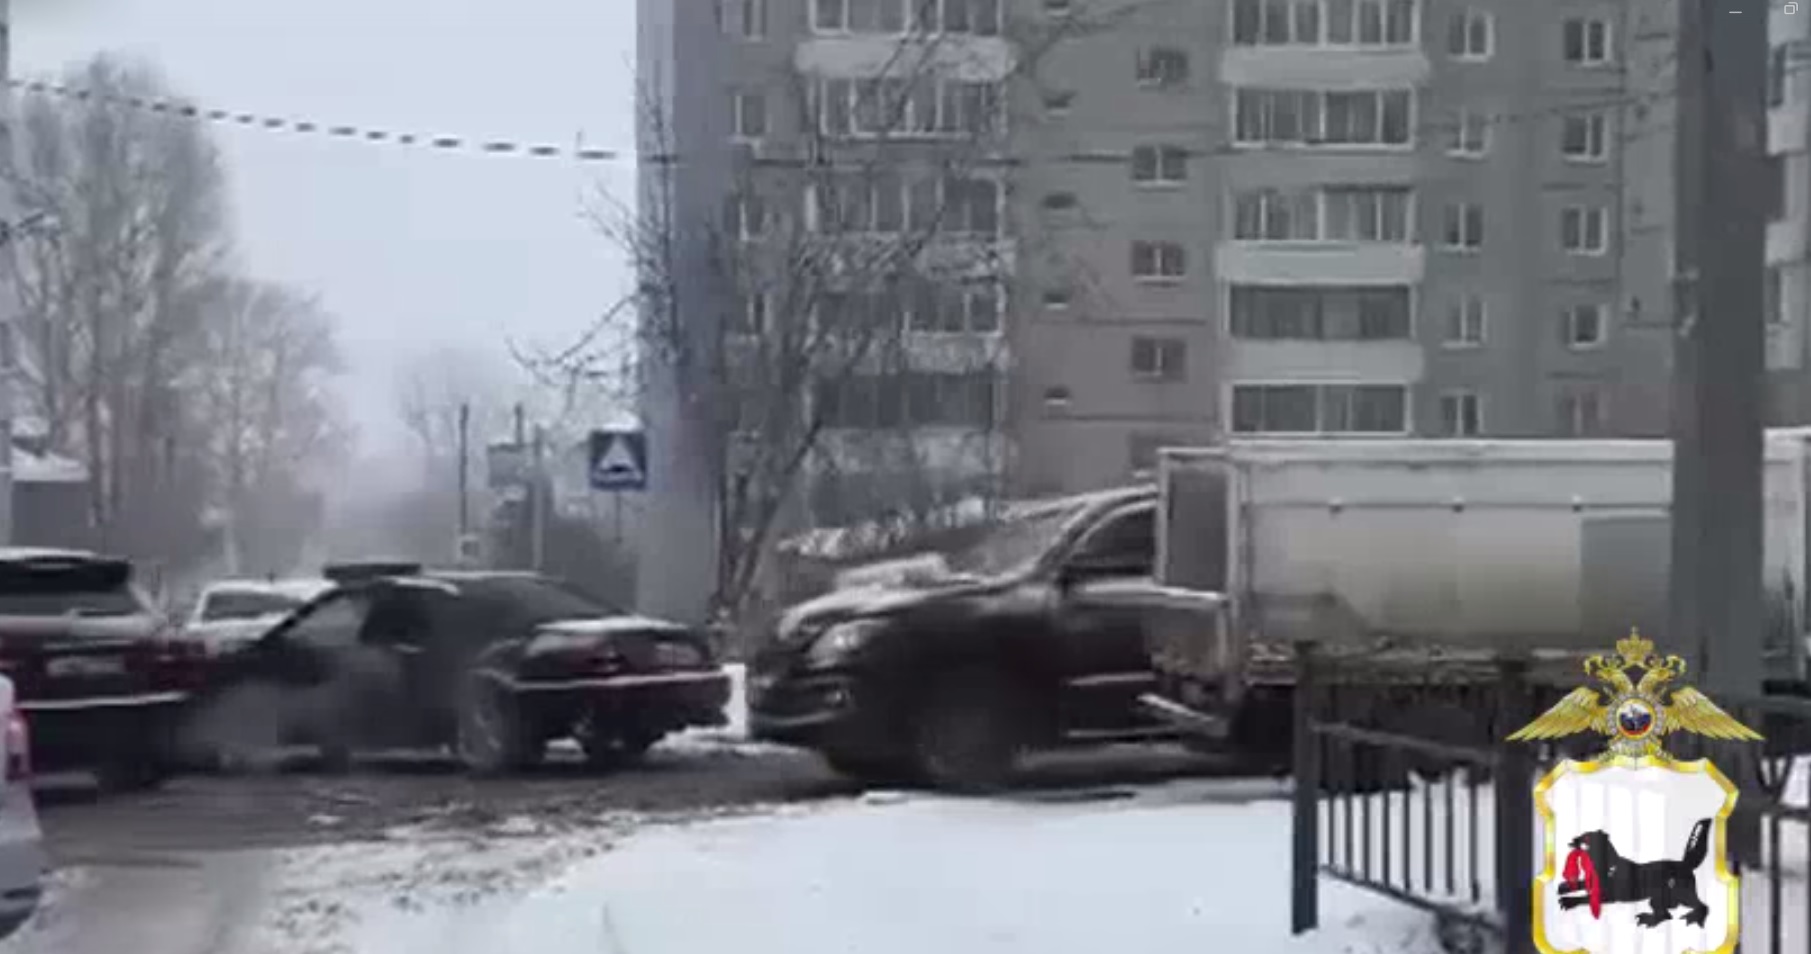 Участники свадебного кортежа в Иркутске стреляли из машин